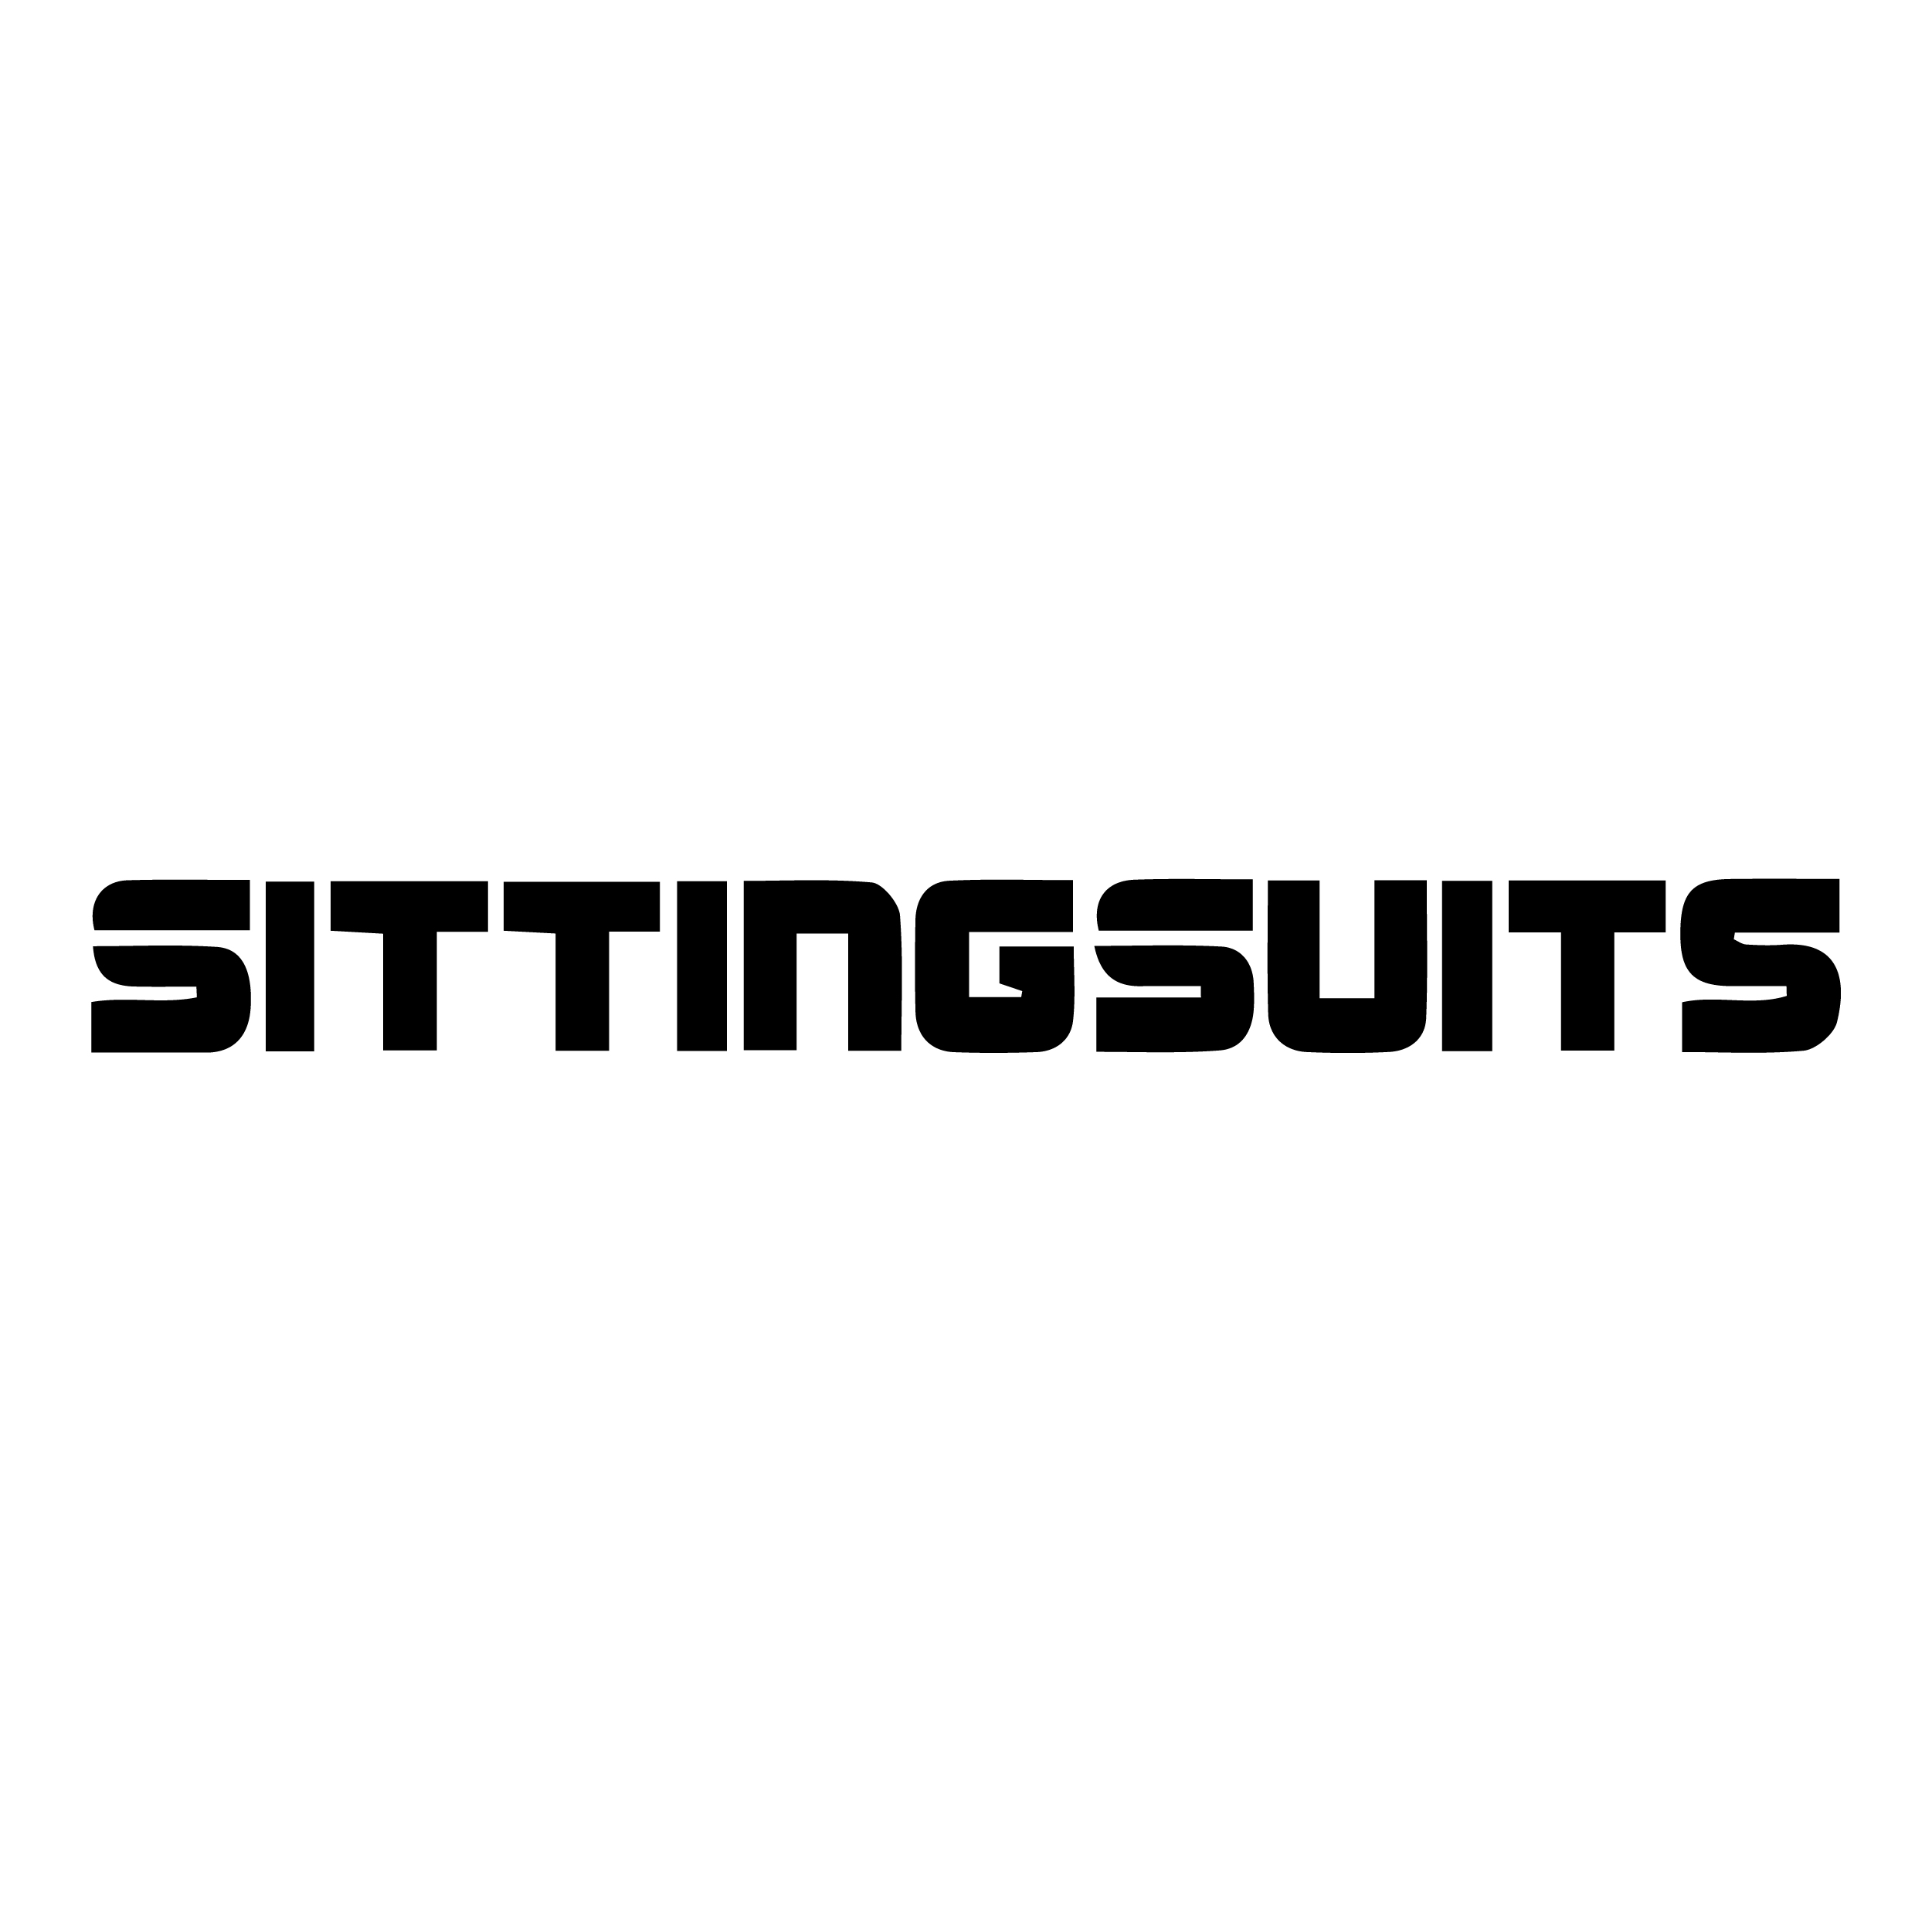 Sittingsuits logo